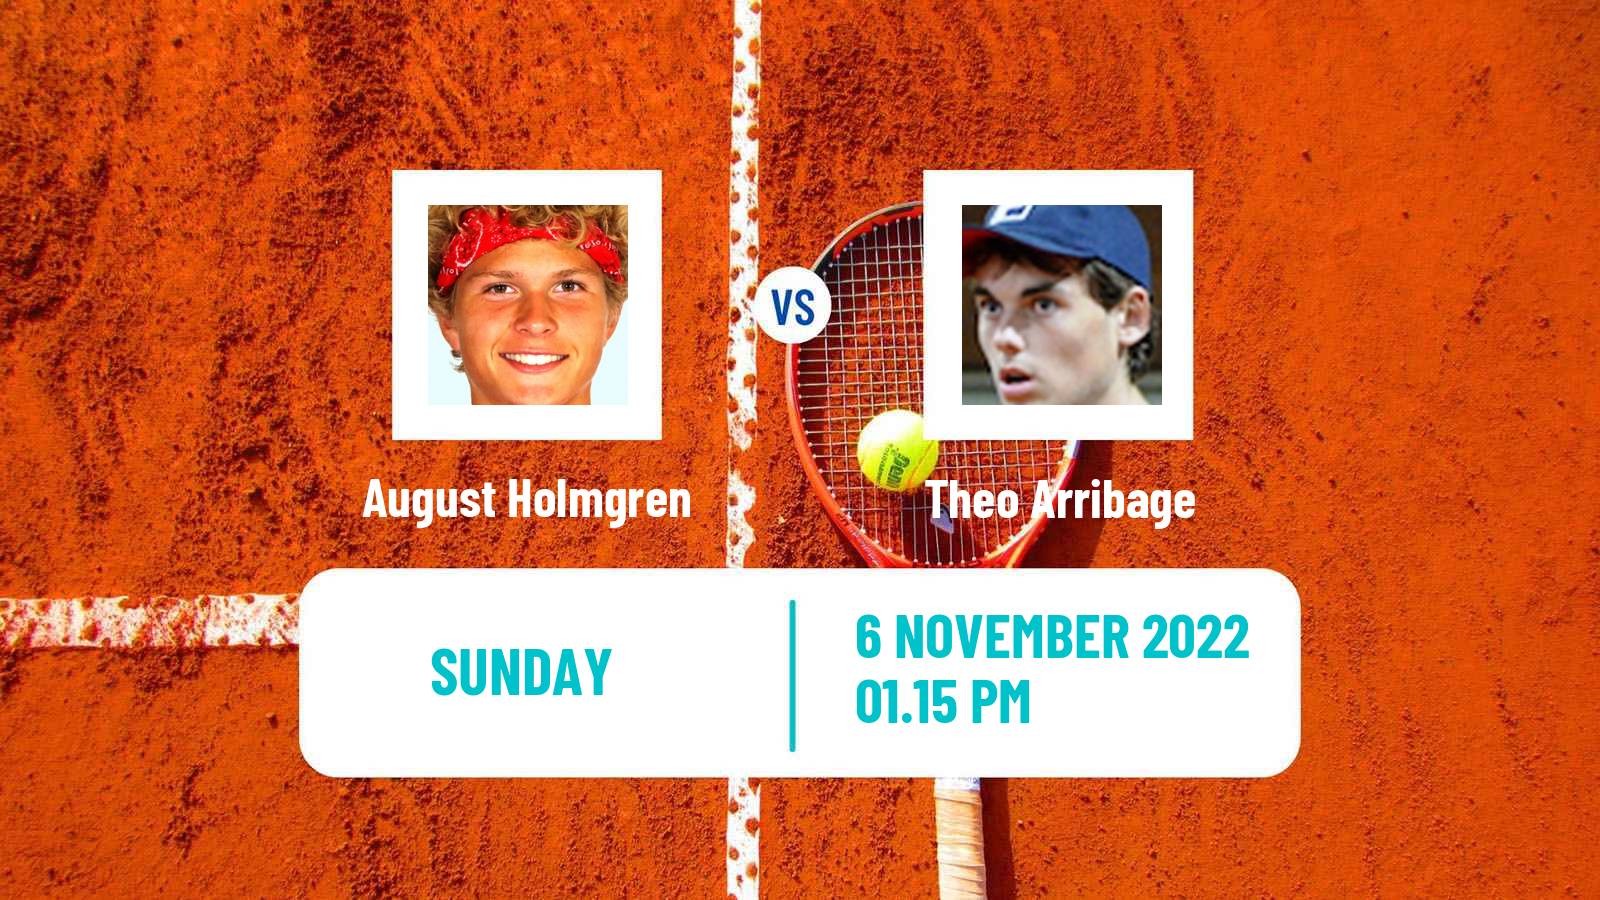 Tennis ATP Challenger August Holmgren - Theo Arribage